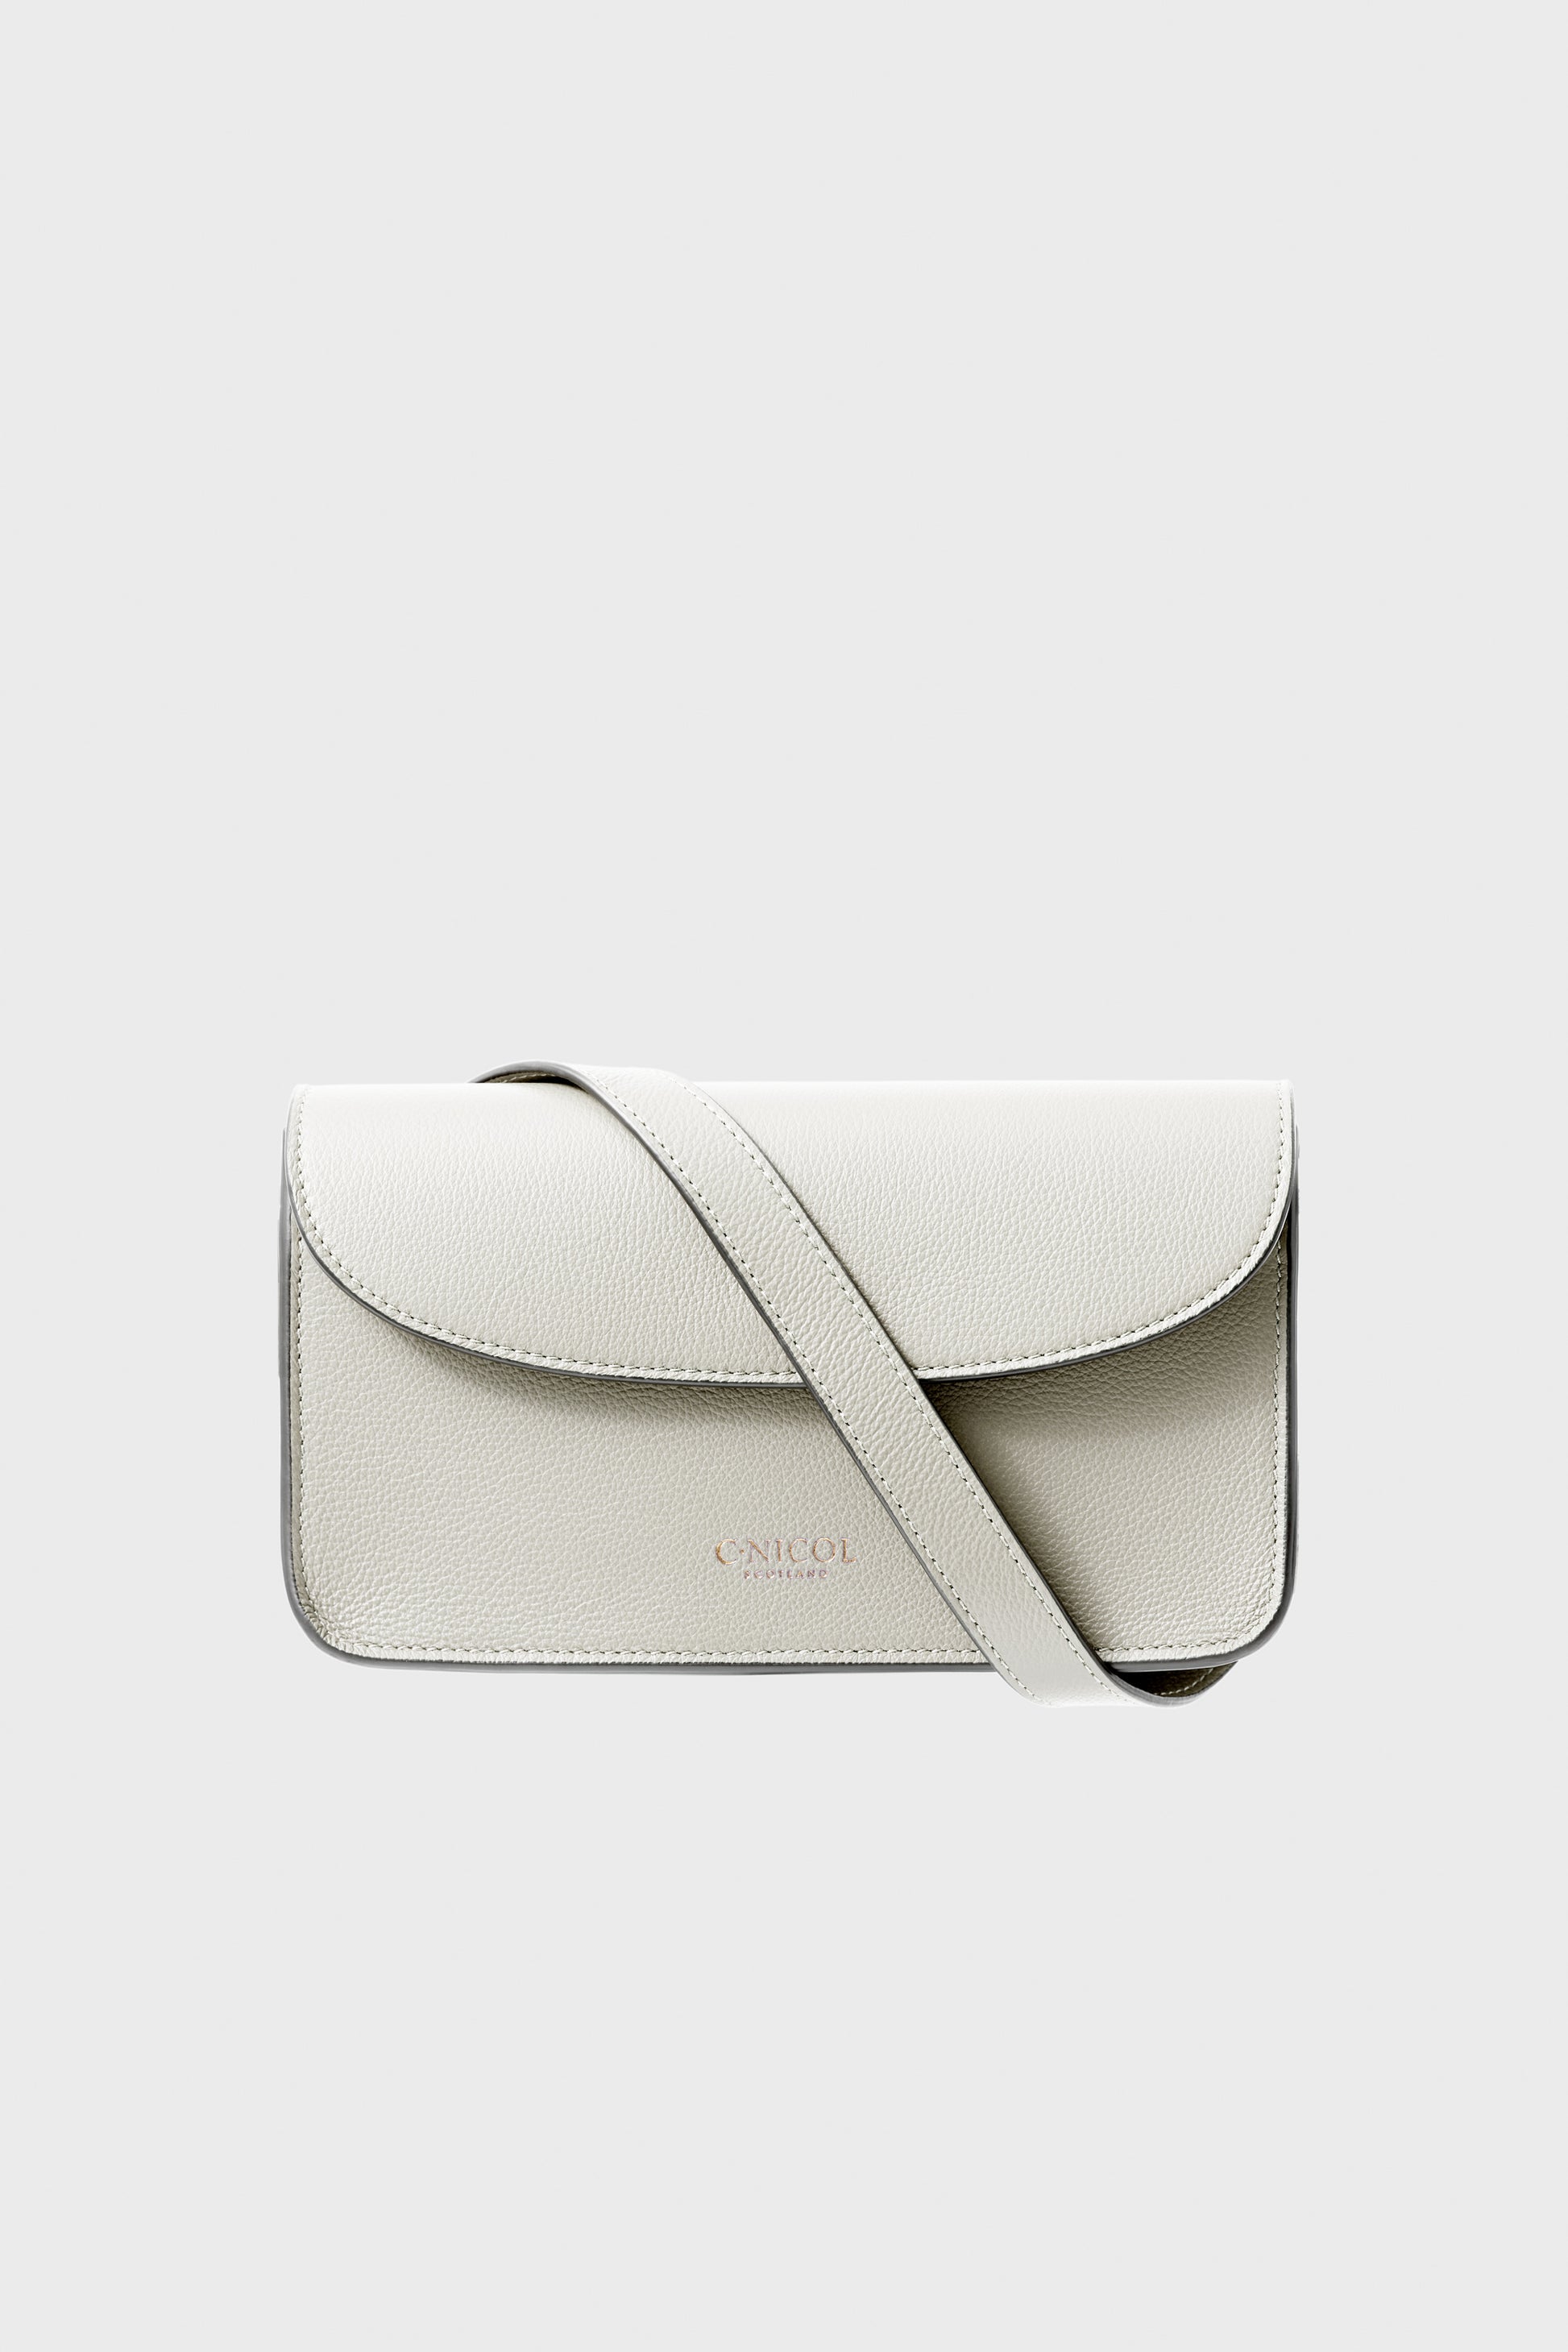 CNicol White Leather Kate Bag 